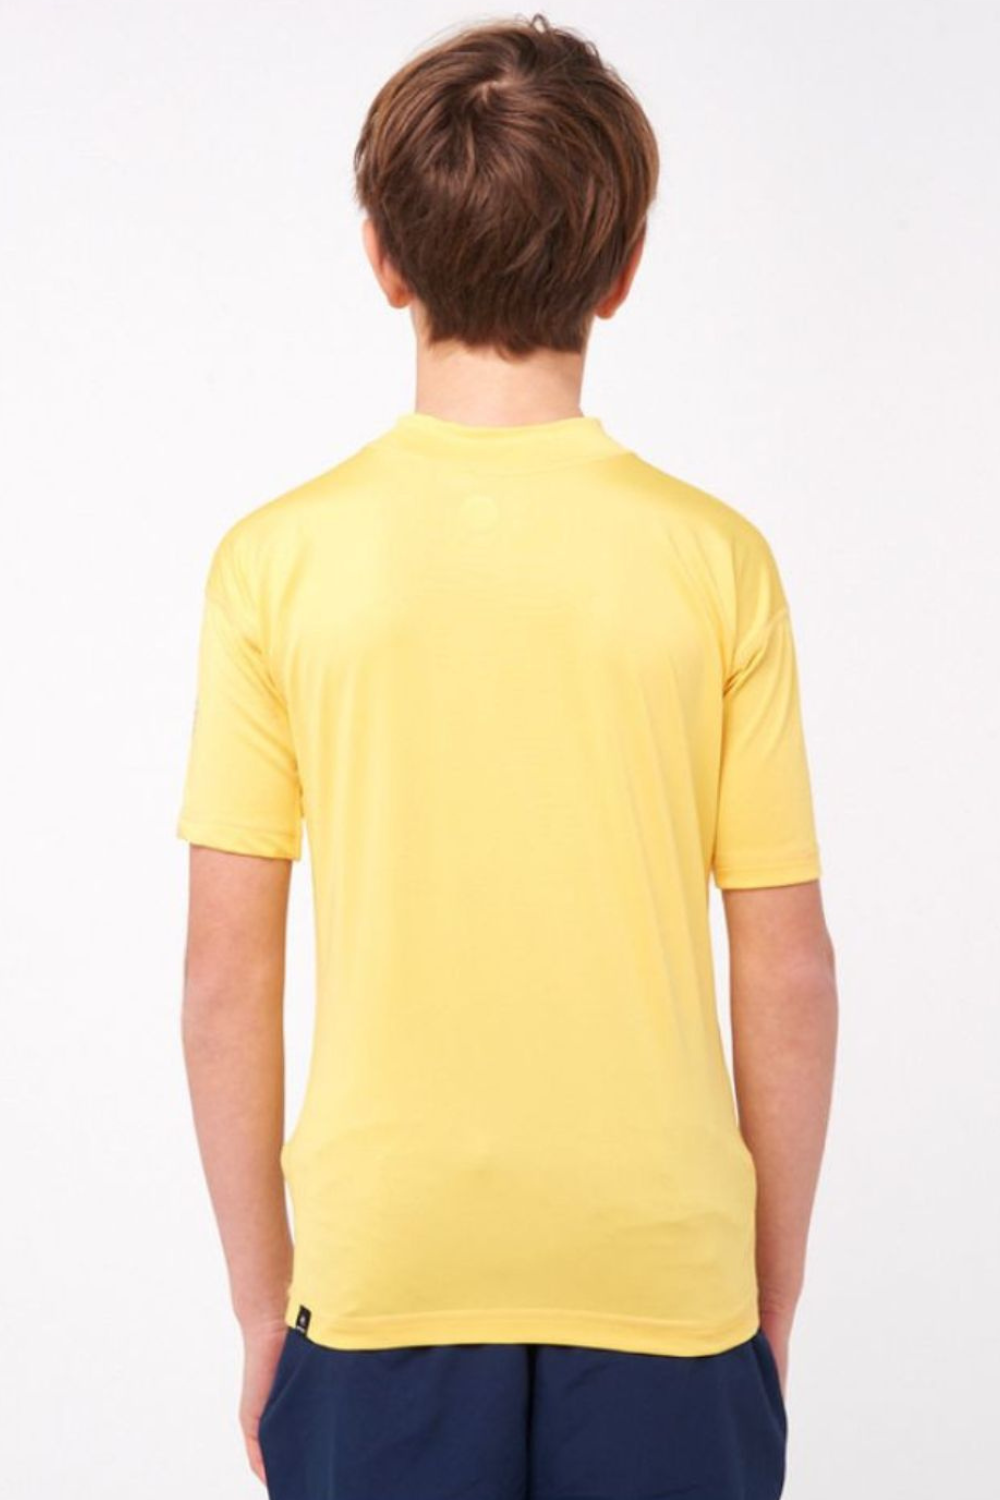 T-shirt anti UV Golden Rays RipCurl Femme